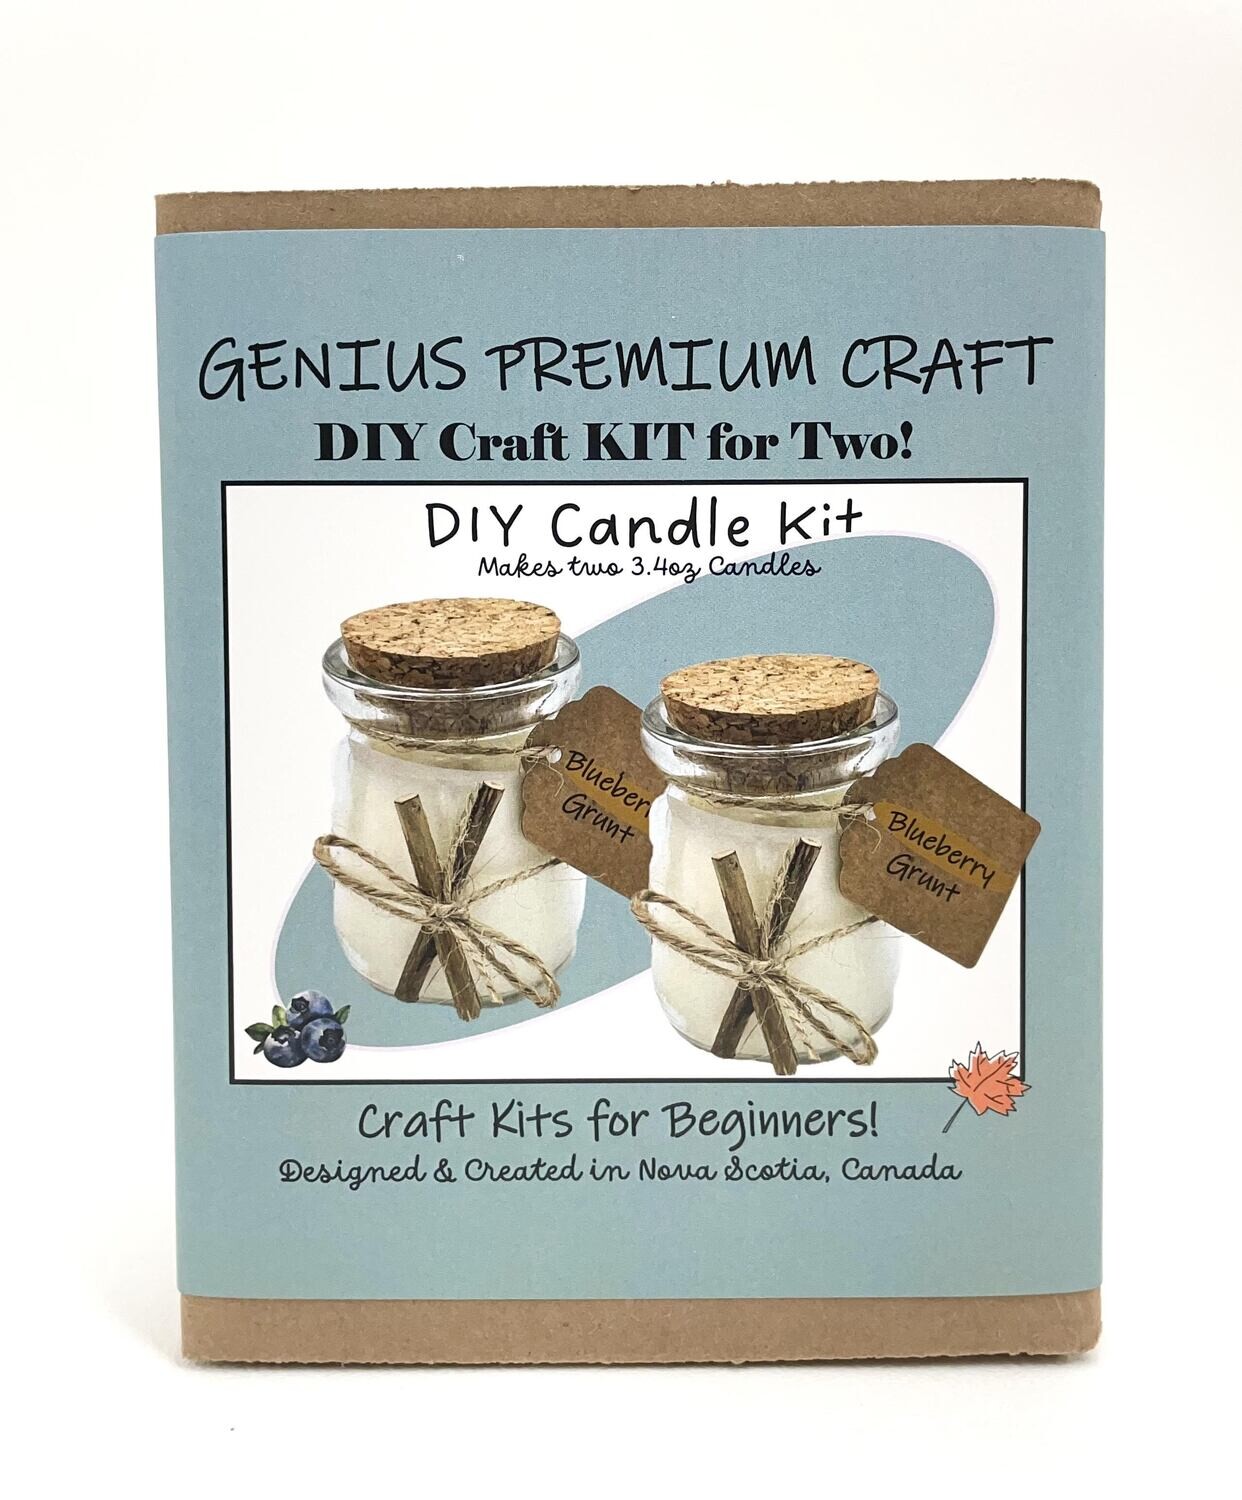 DIY Candle Kit - NS Blueberry Grunt - Genius Premium Craft